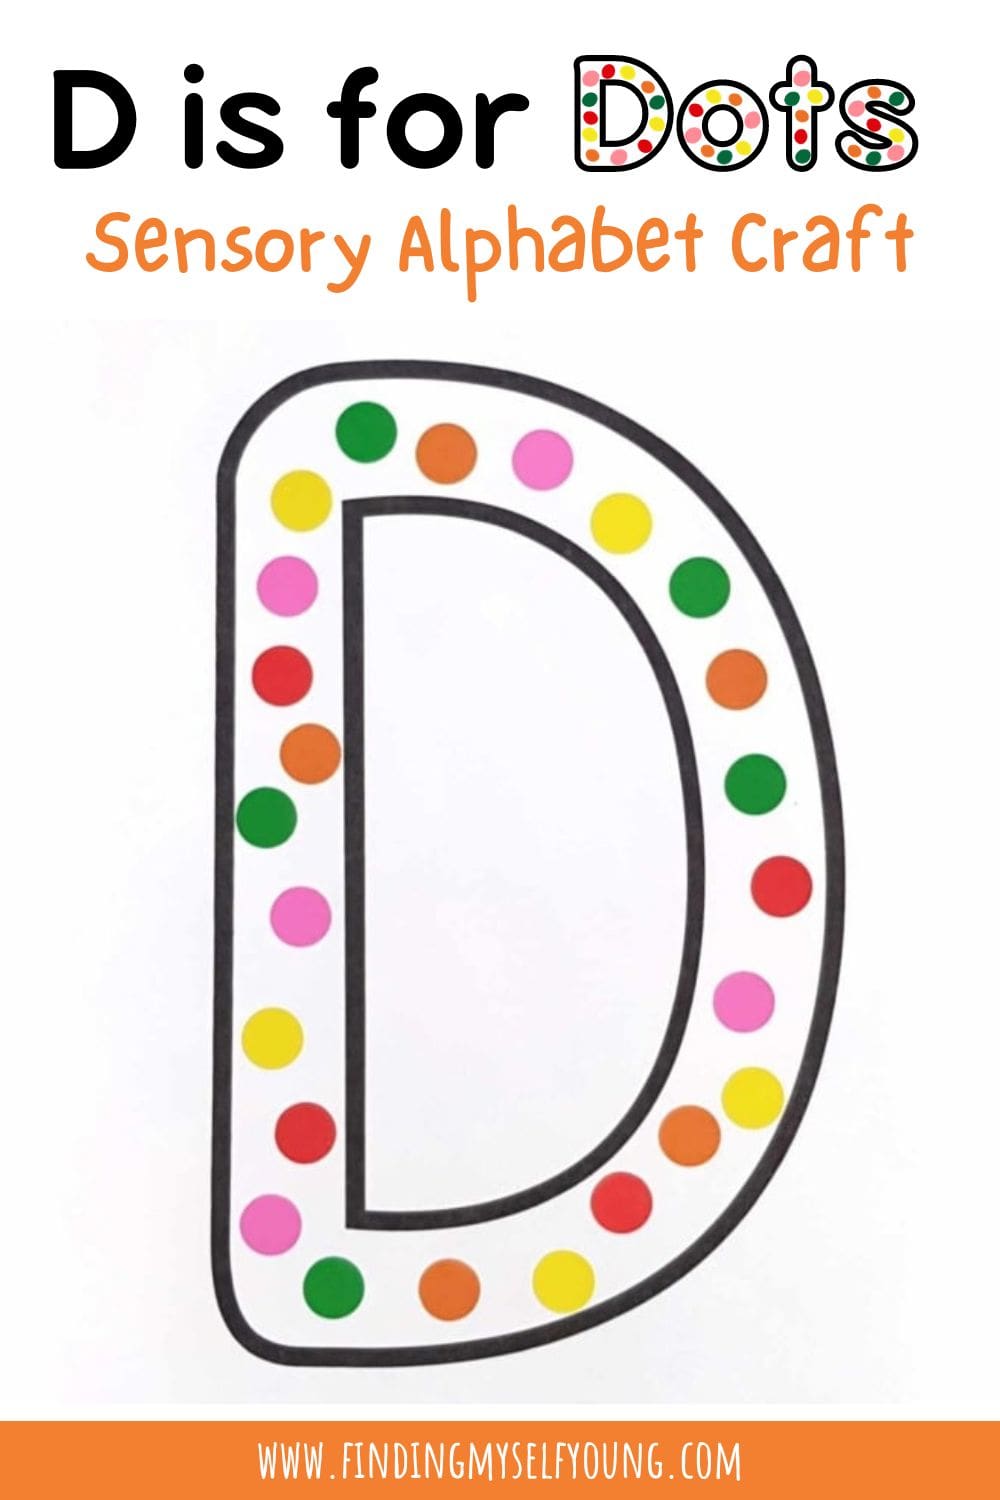 D is for dots sensory alphabet letter craft for kids.